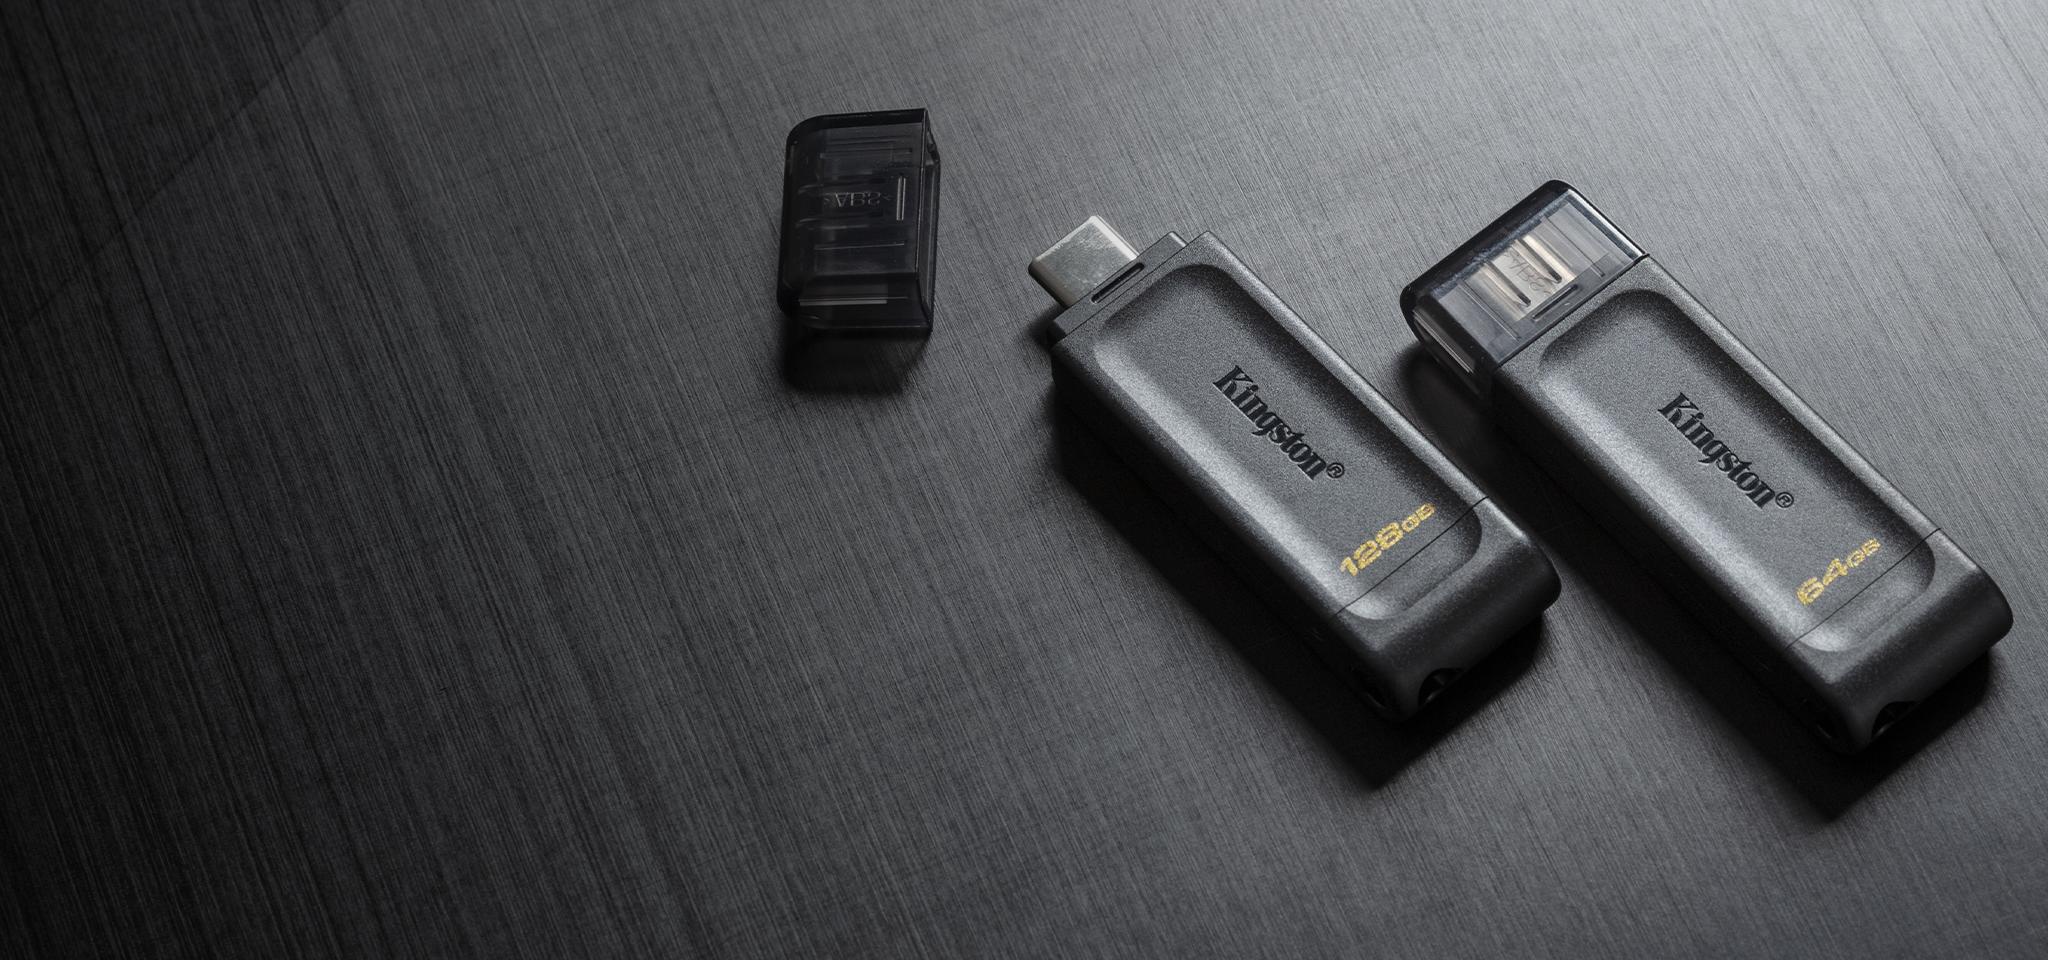 DataTraveler 70 Flash Drive USB-C